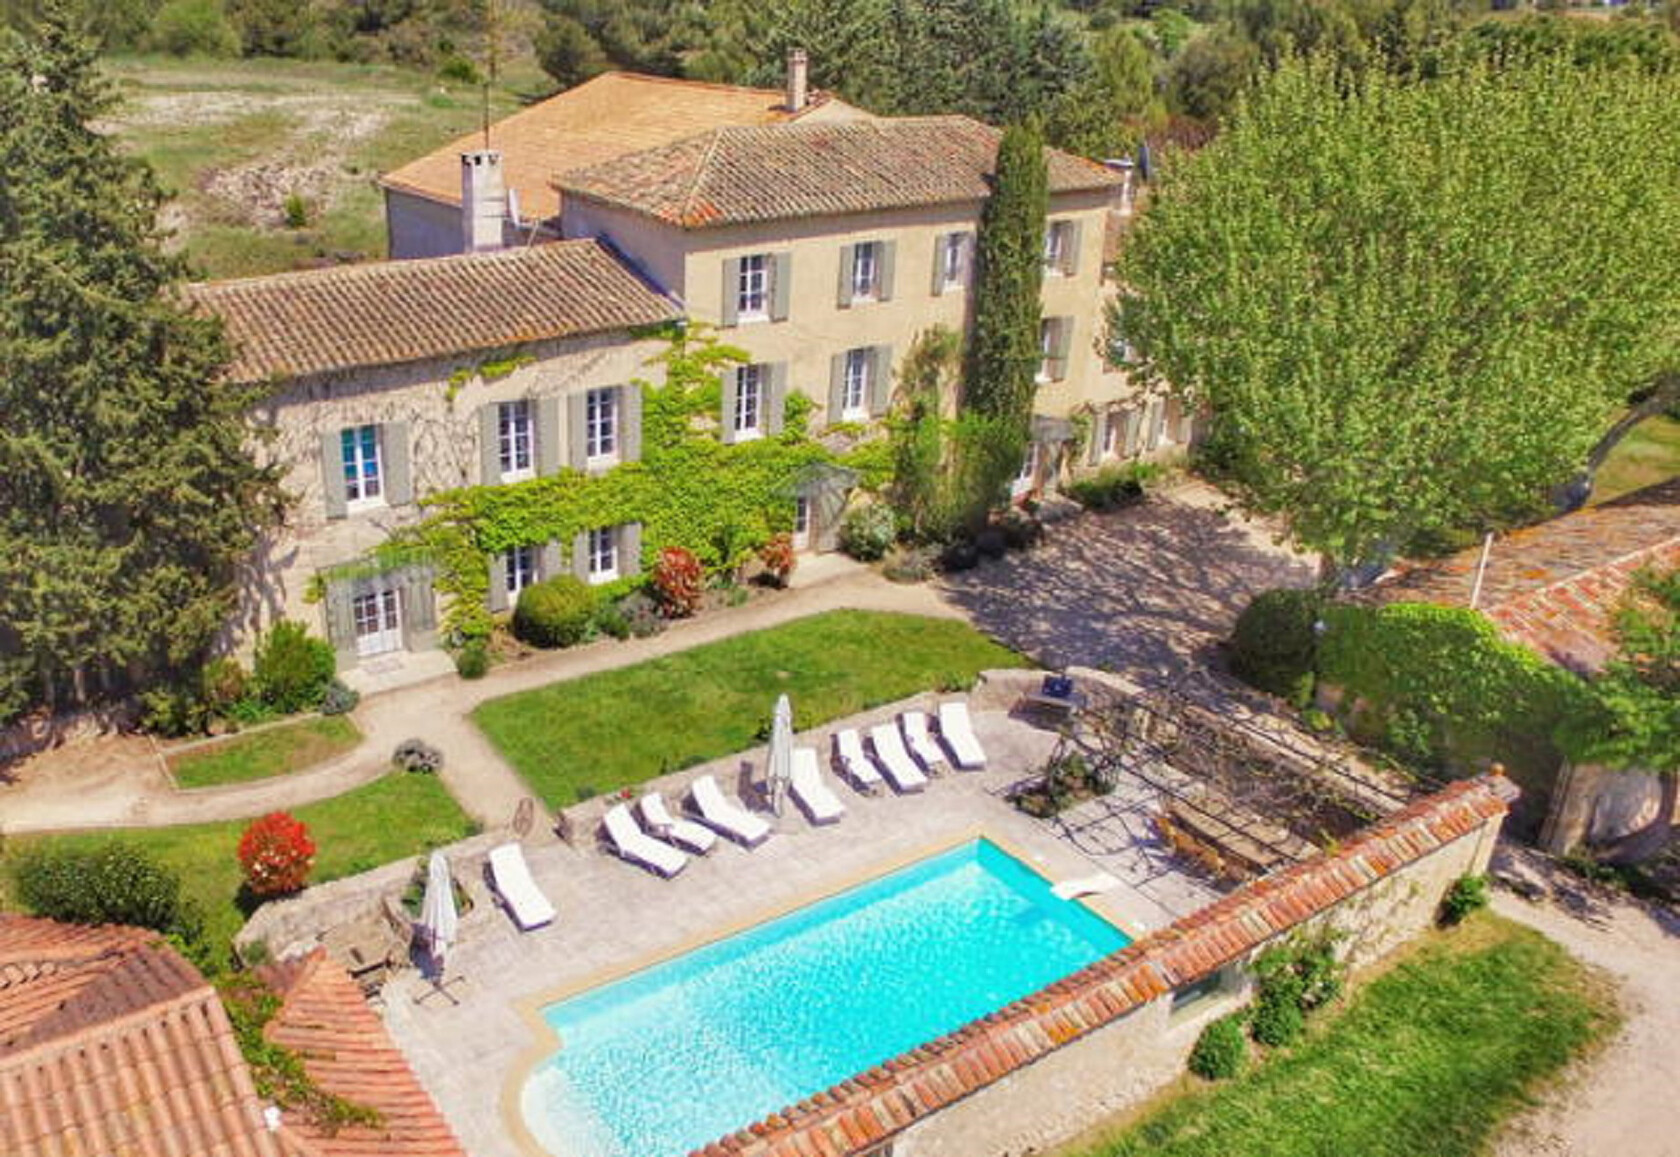 Provence Holidays Luxury Villas - Paradis en Provence